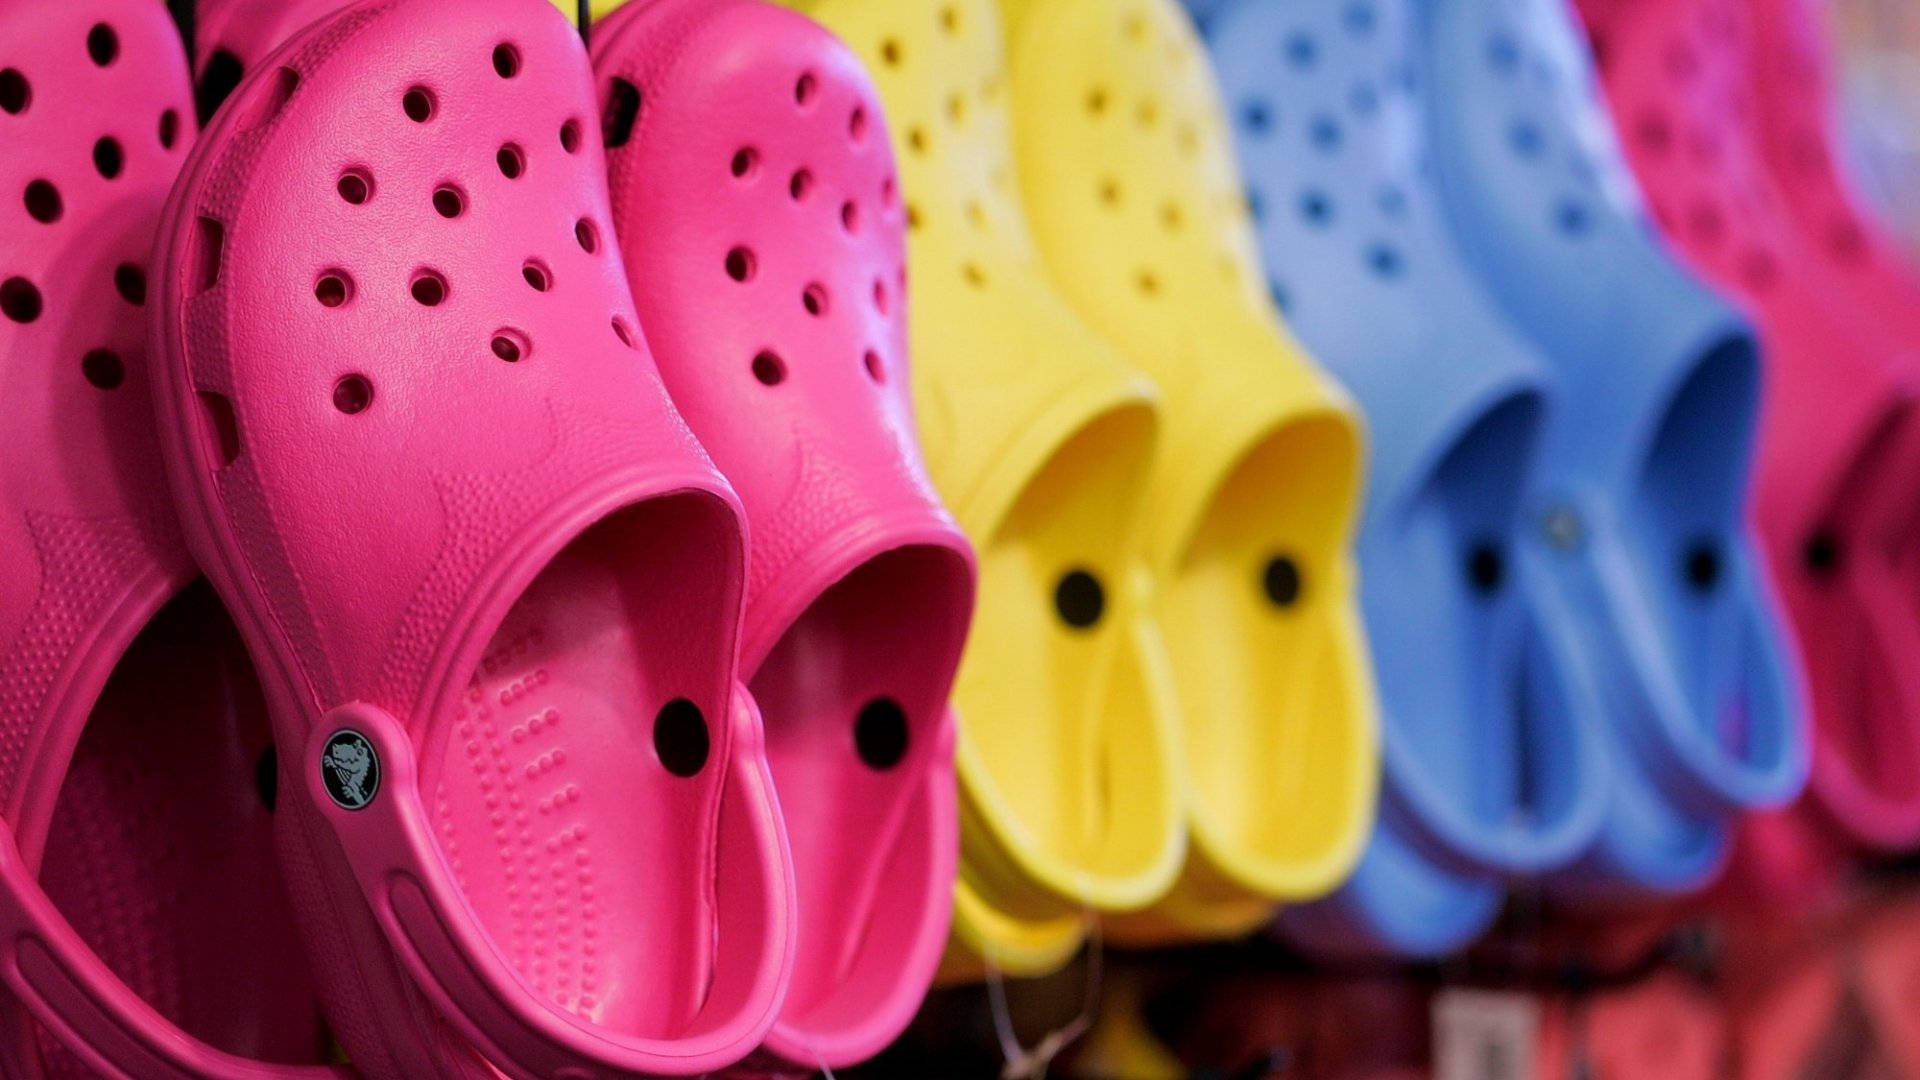 Colorful Array Of Crocs Footwear On Display